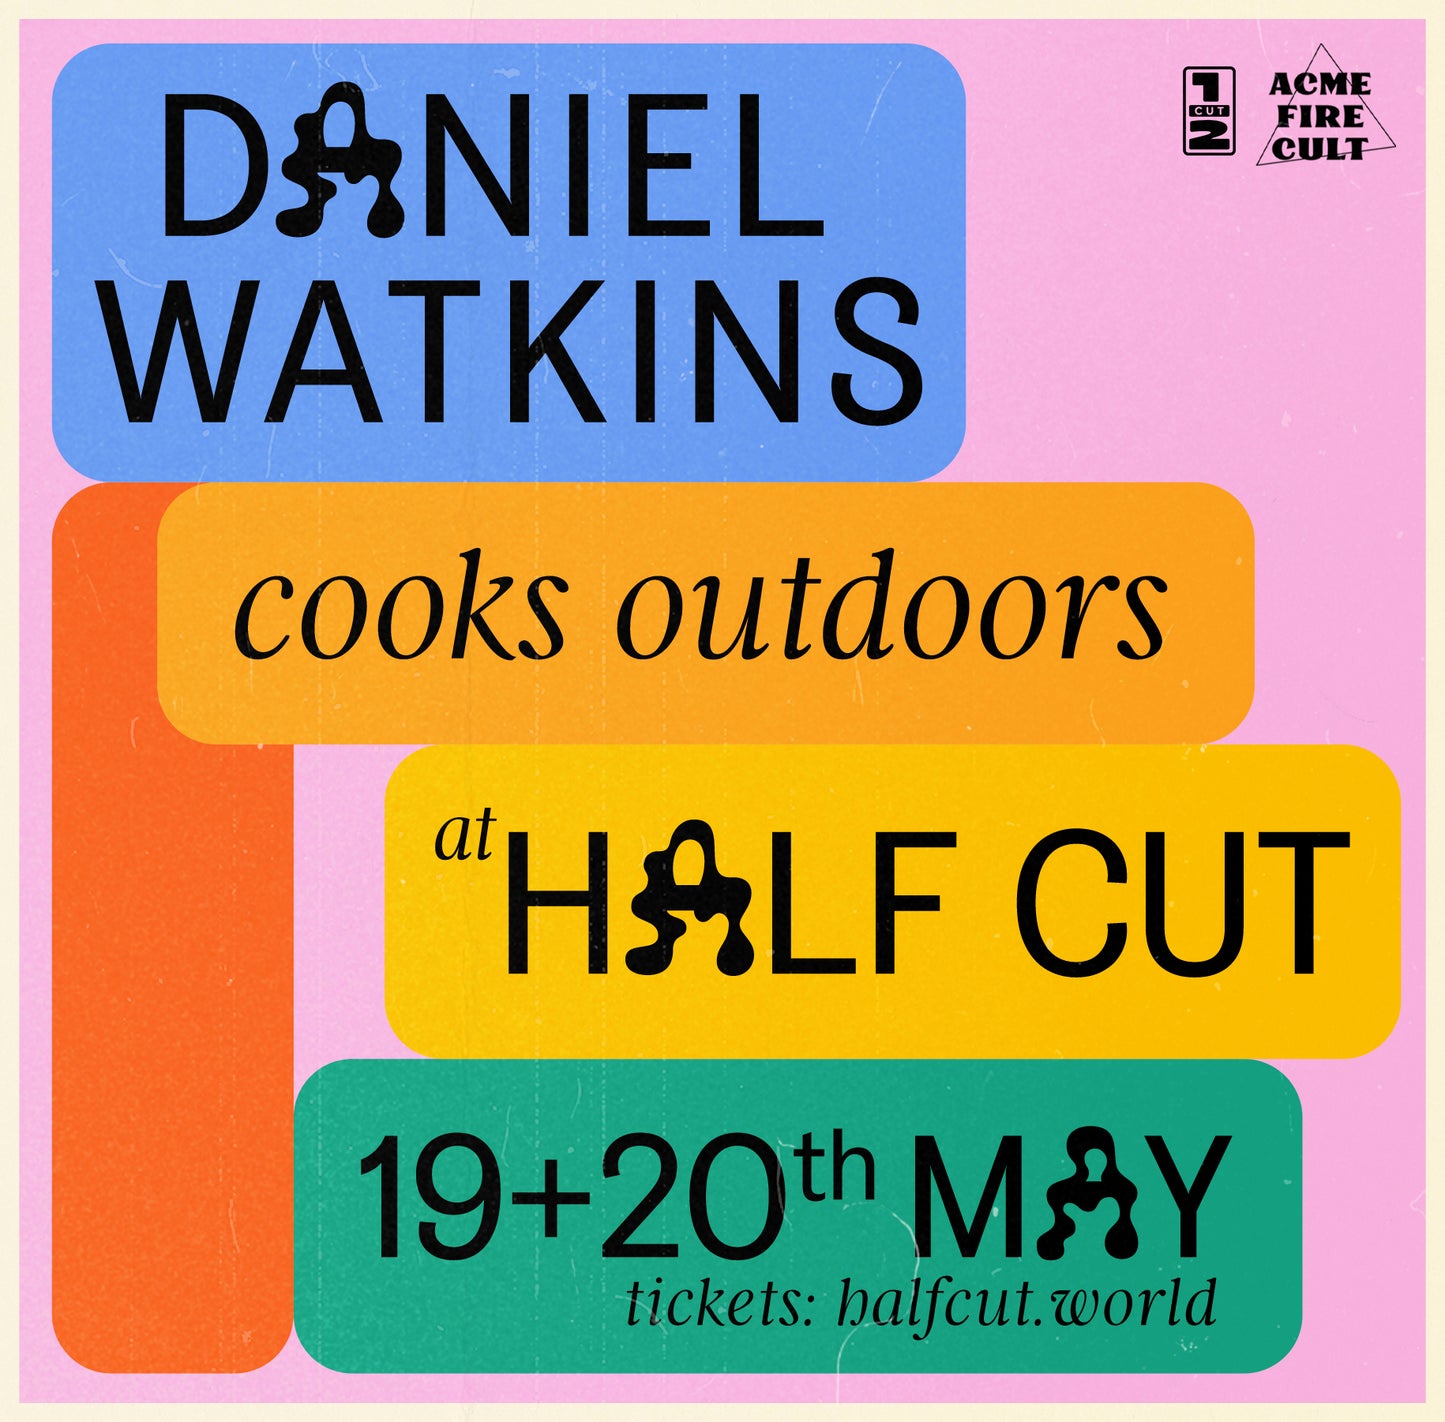 Daniel Wakins Cooks Outdoors @ Half Cut